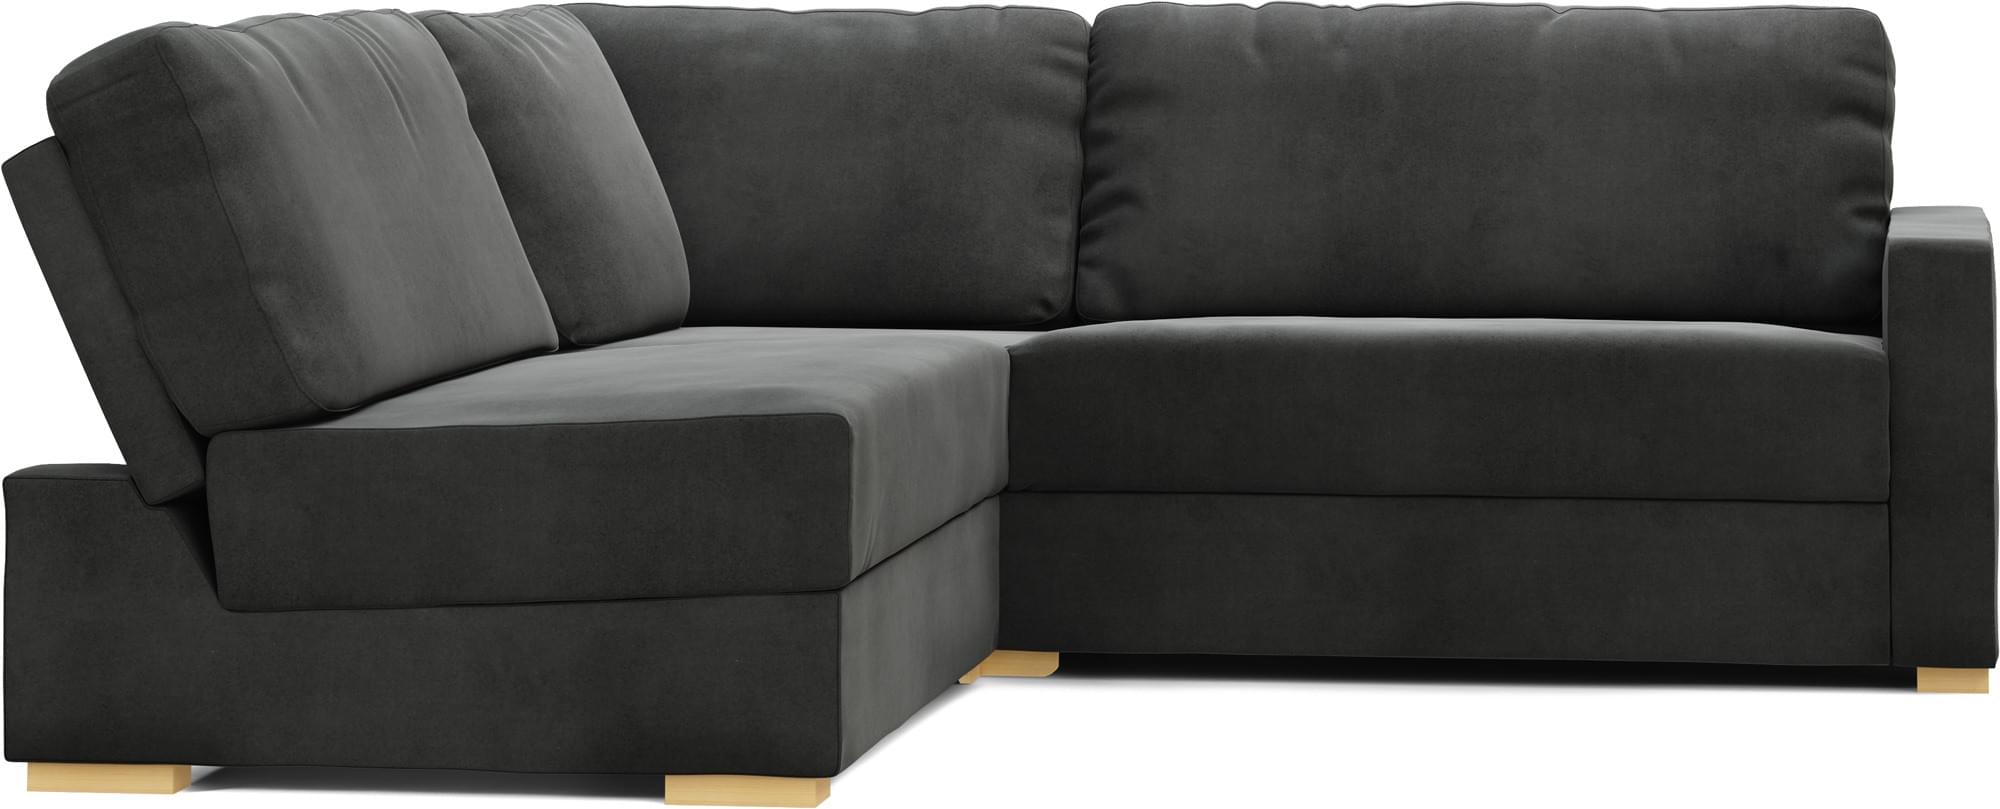 Xan 2X2 Armless Single Sofa Bed